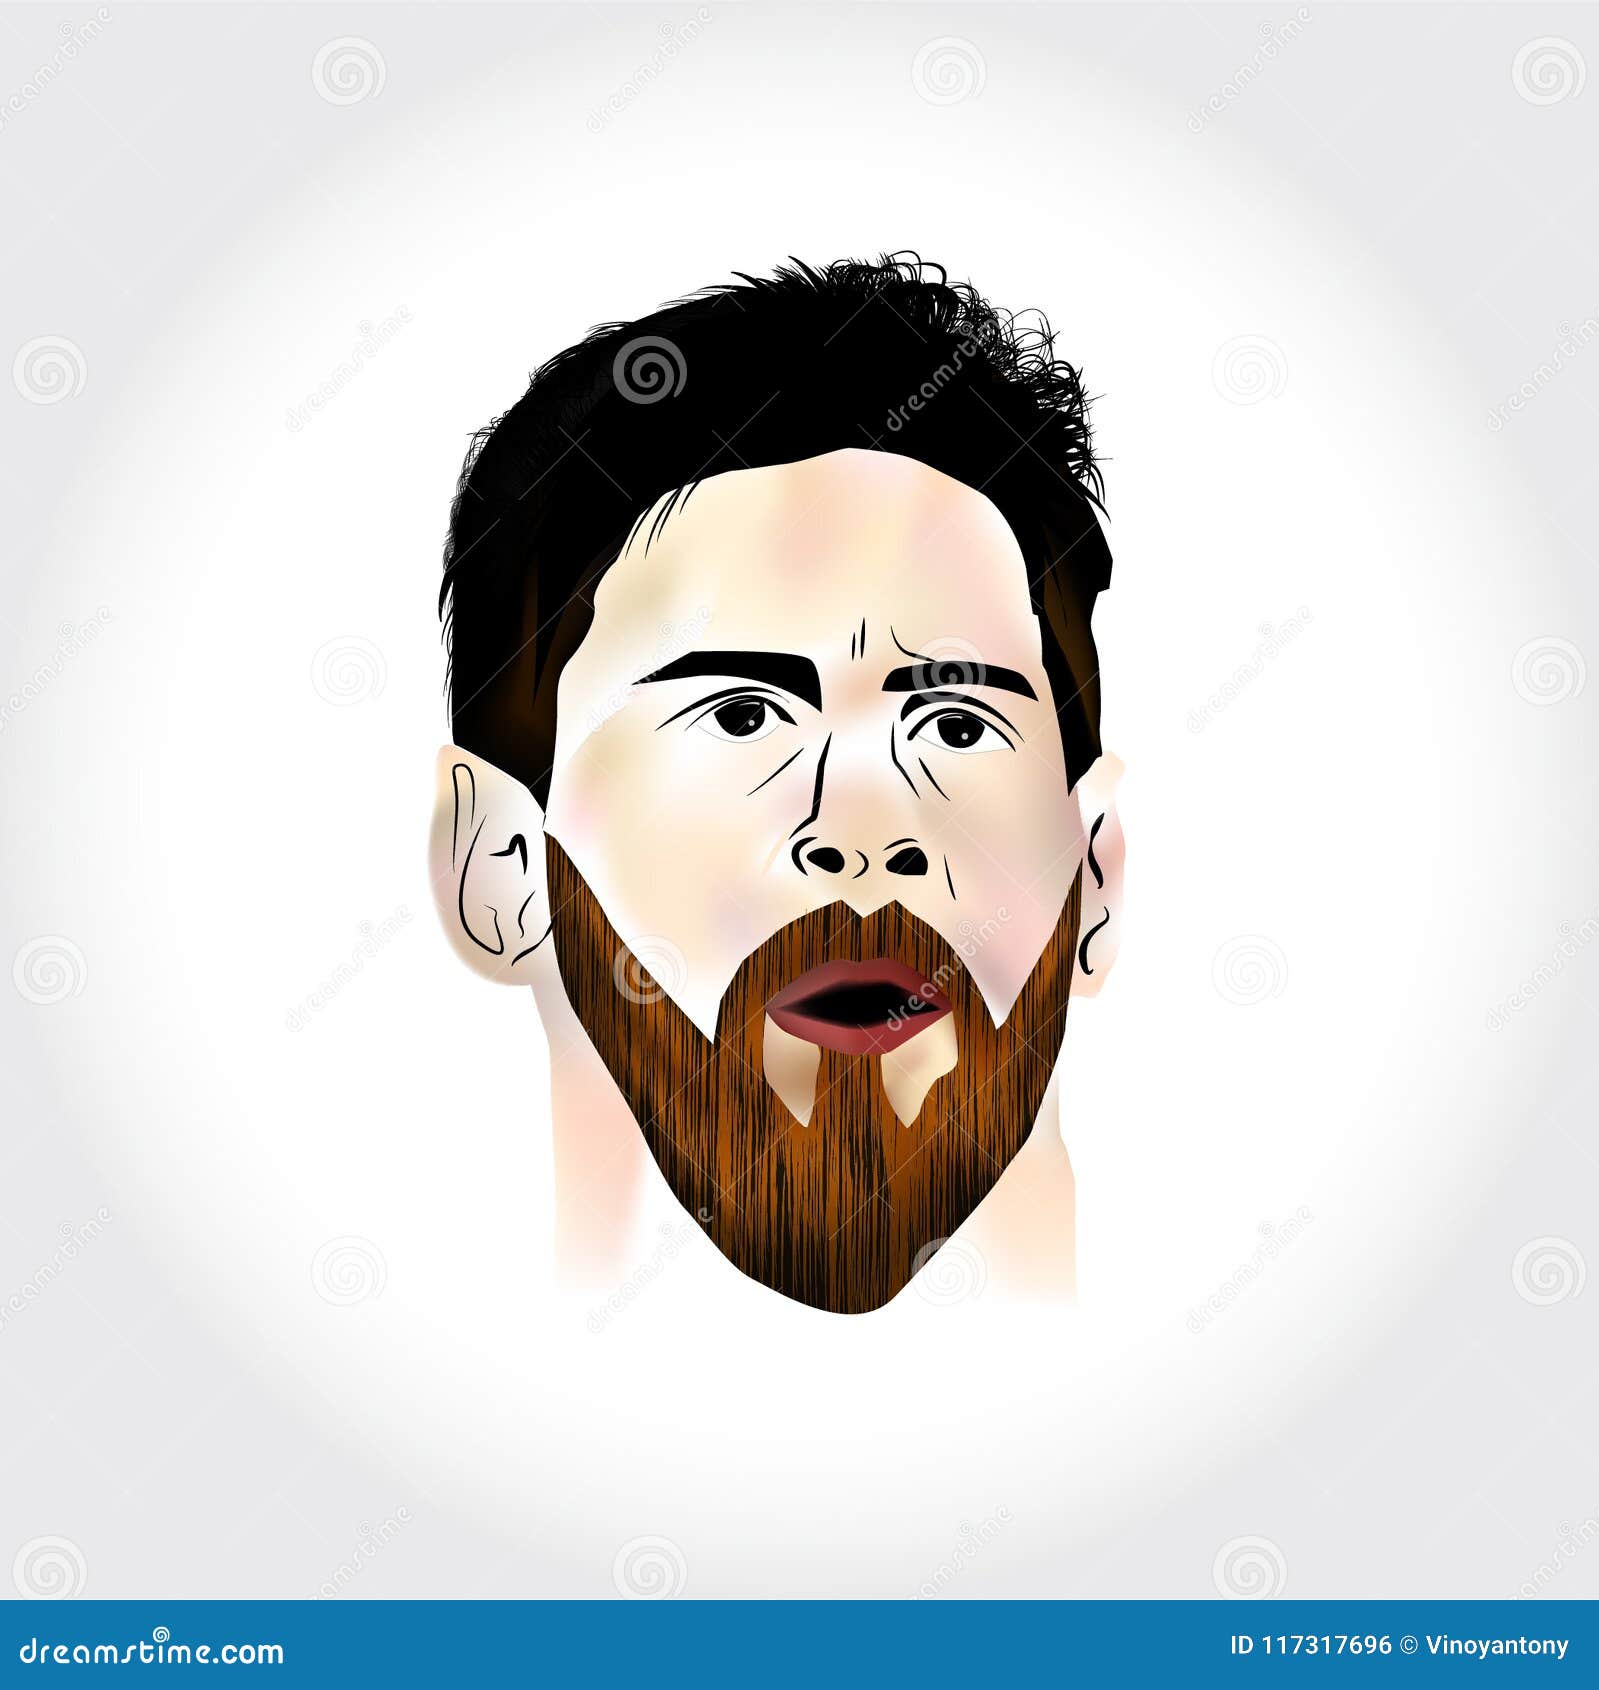 Tekening Van Messi / 1000+ images about Kleurplaten WK 2018 on Pinterest ... - Bienvenidos a la ...